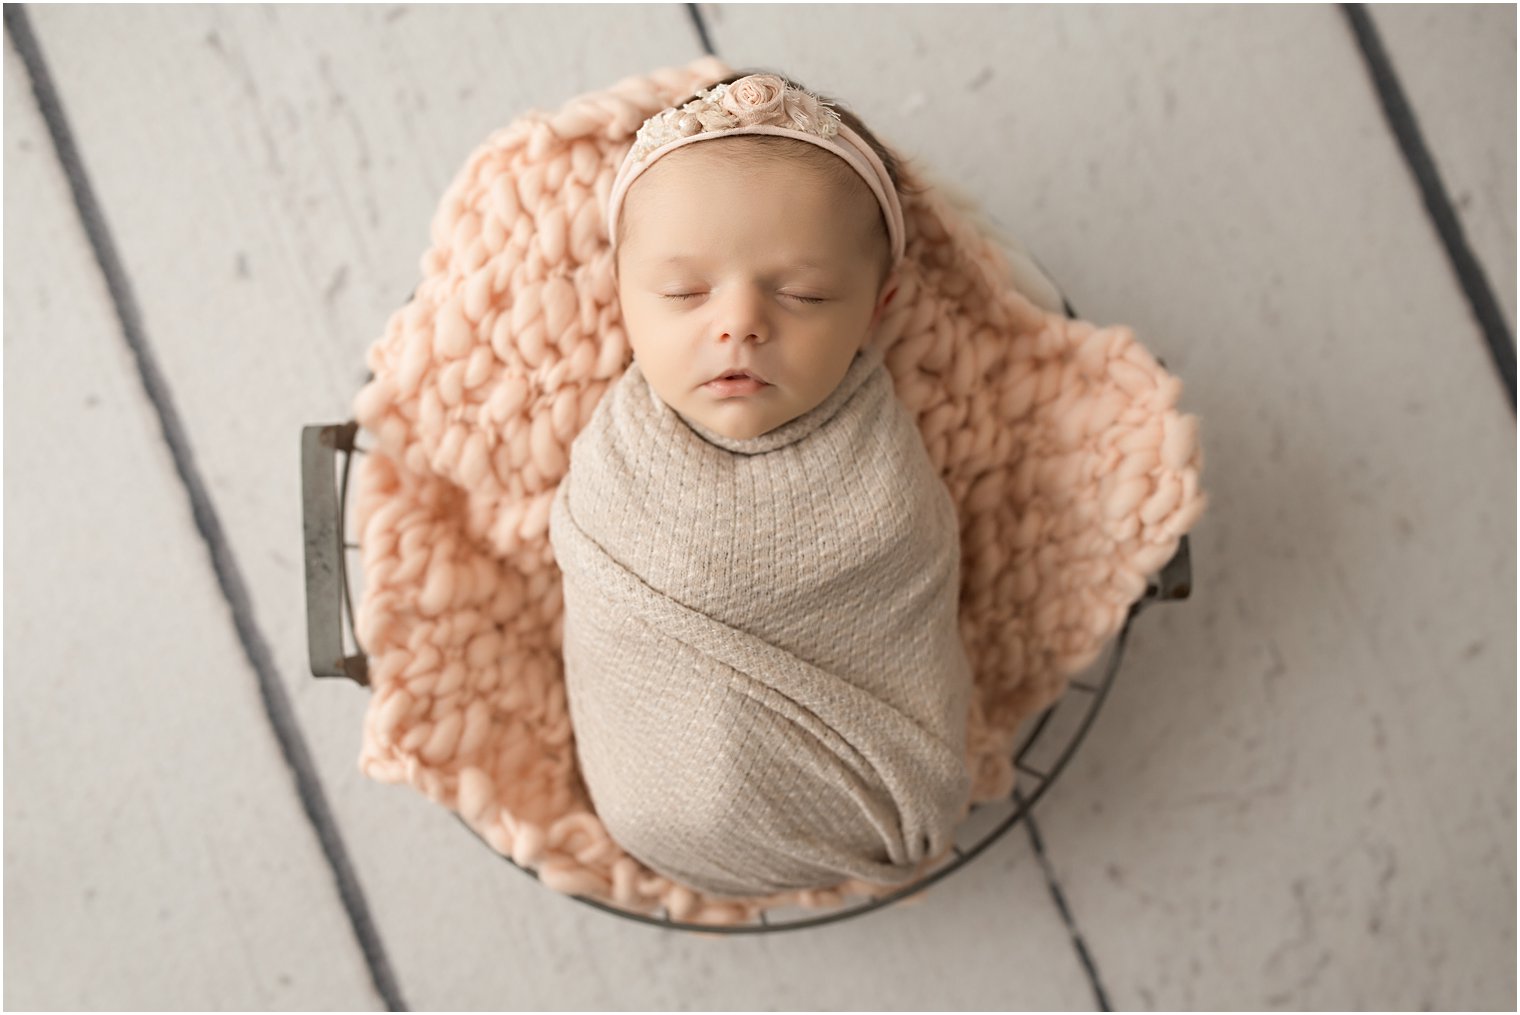 Newborn in a basket and blankets in peach tones | Burlington County Newborn Photographer | Newborn session by Idalia Photography